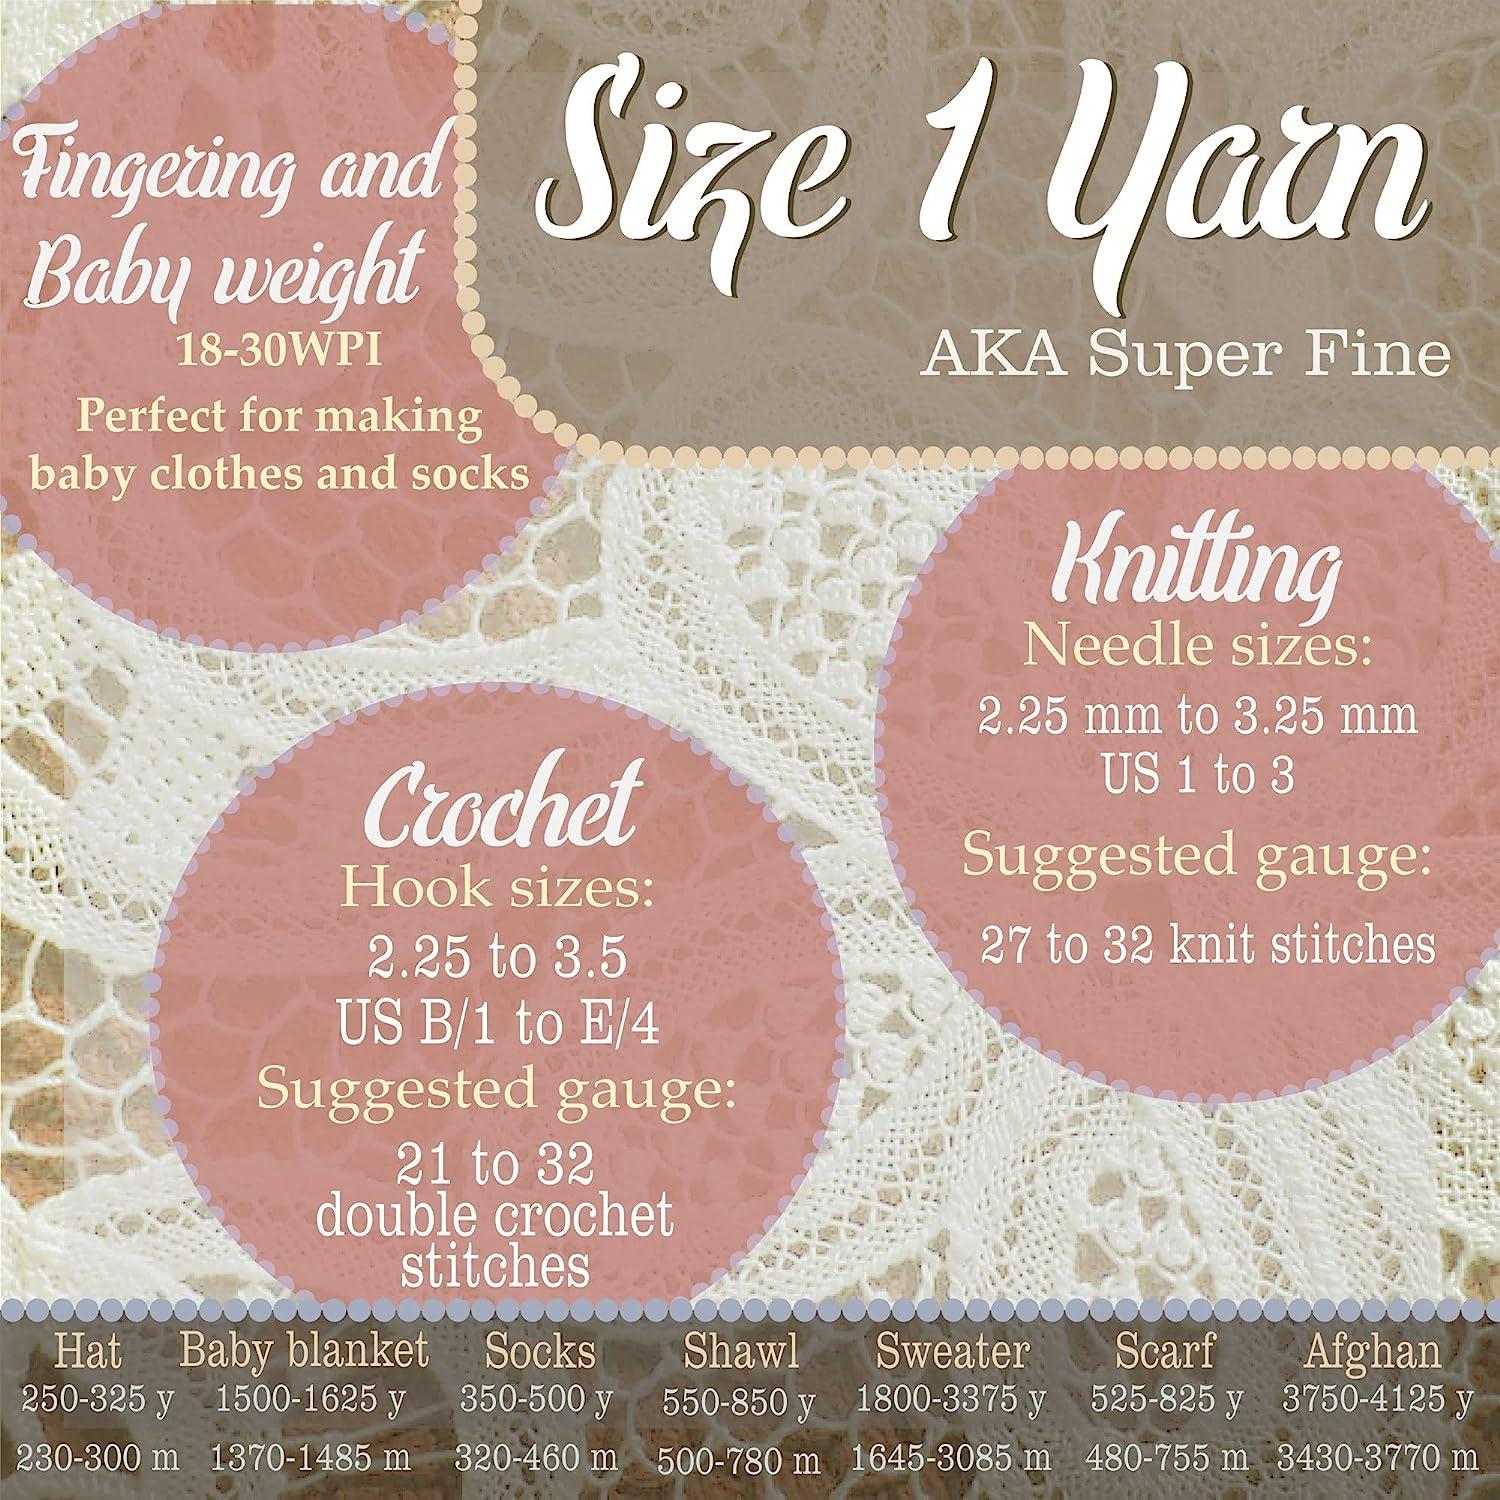 JubileeYarn Soft and Slim Yarn - Baby Weight Bamboo Wool Blend - 50g/Skein  - 9913 Apricot - 2 Skeins